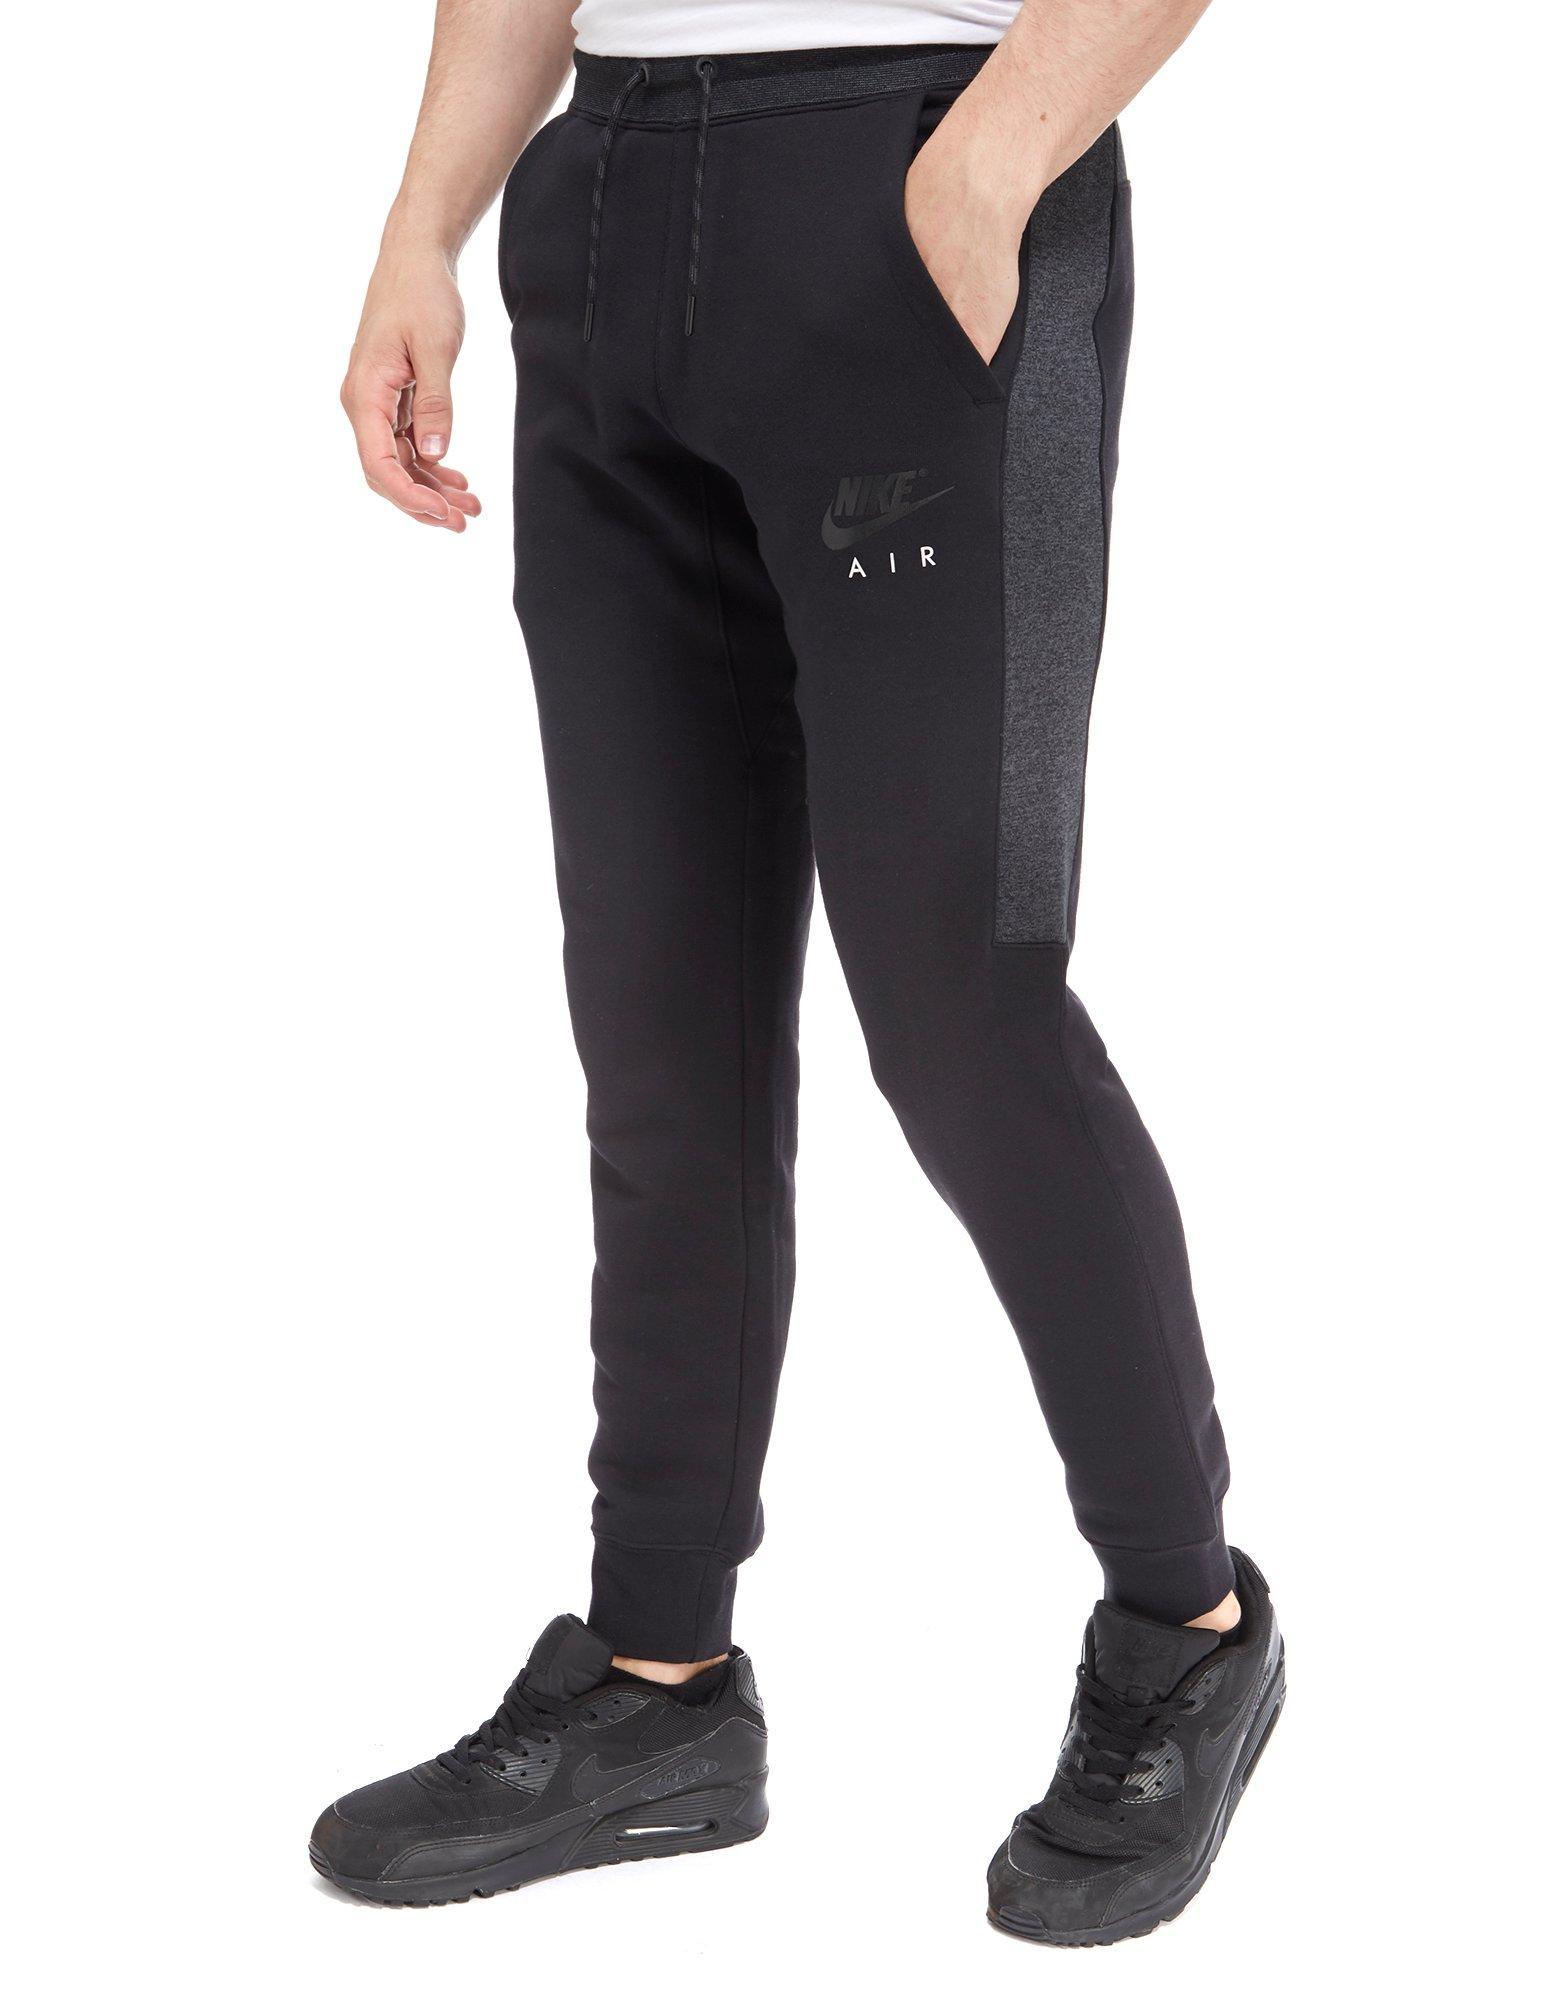 Lyst - Nike Air Deep Cuff Fleece Pants in Black for Men